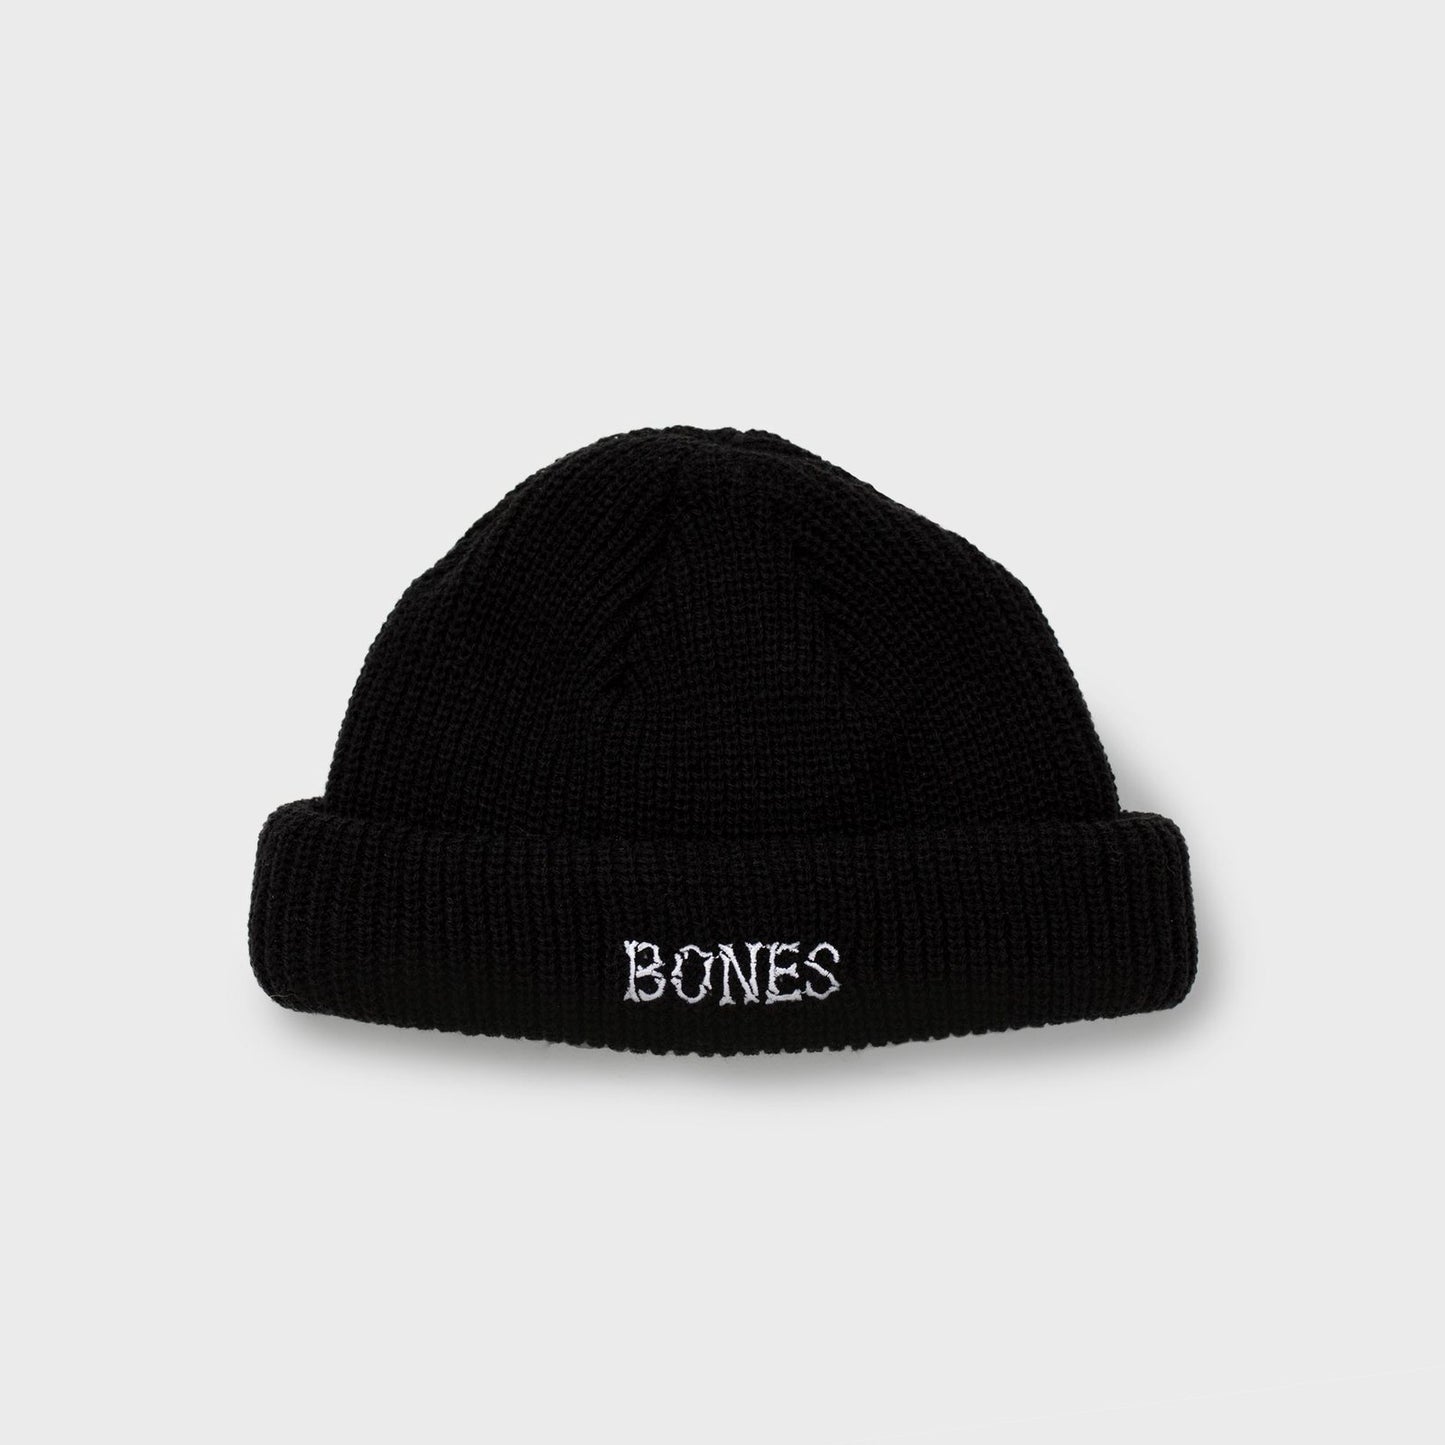 Black Bones - Docker knit Beanie